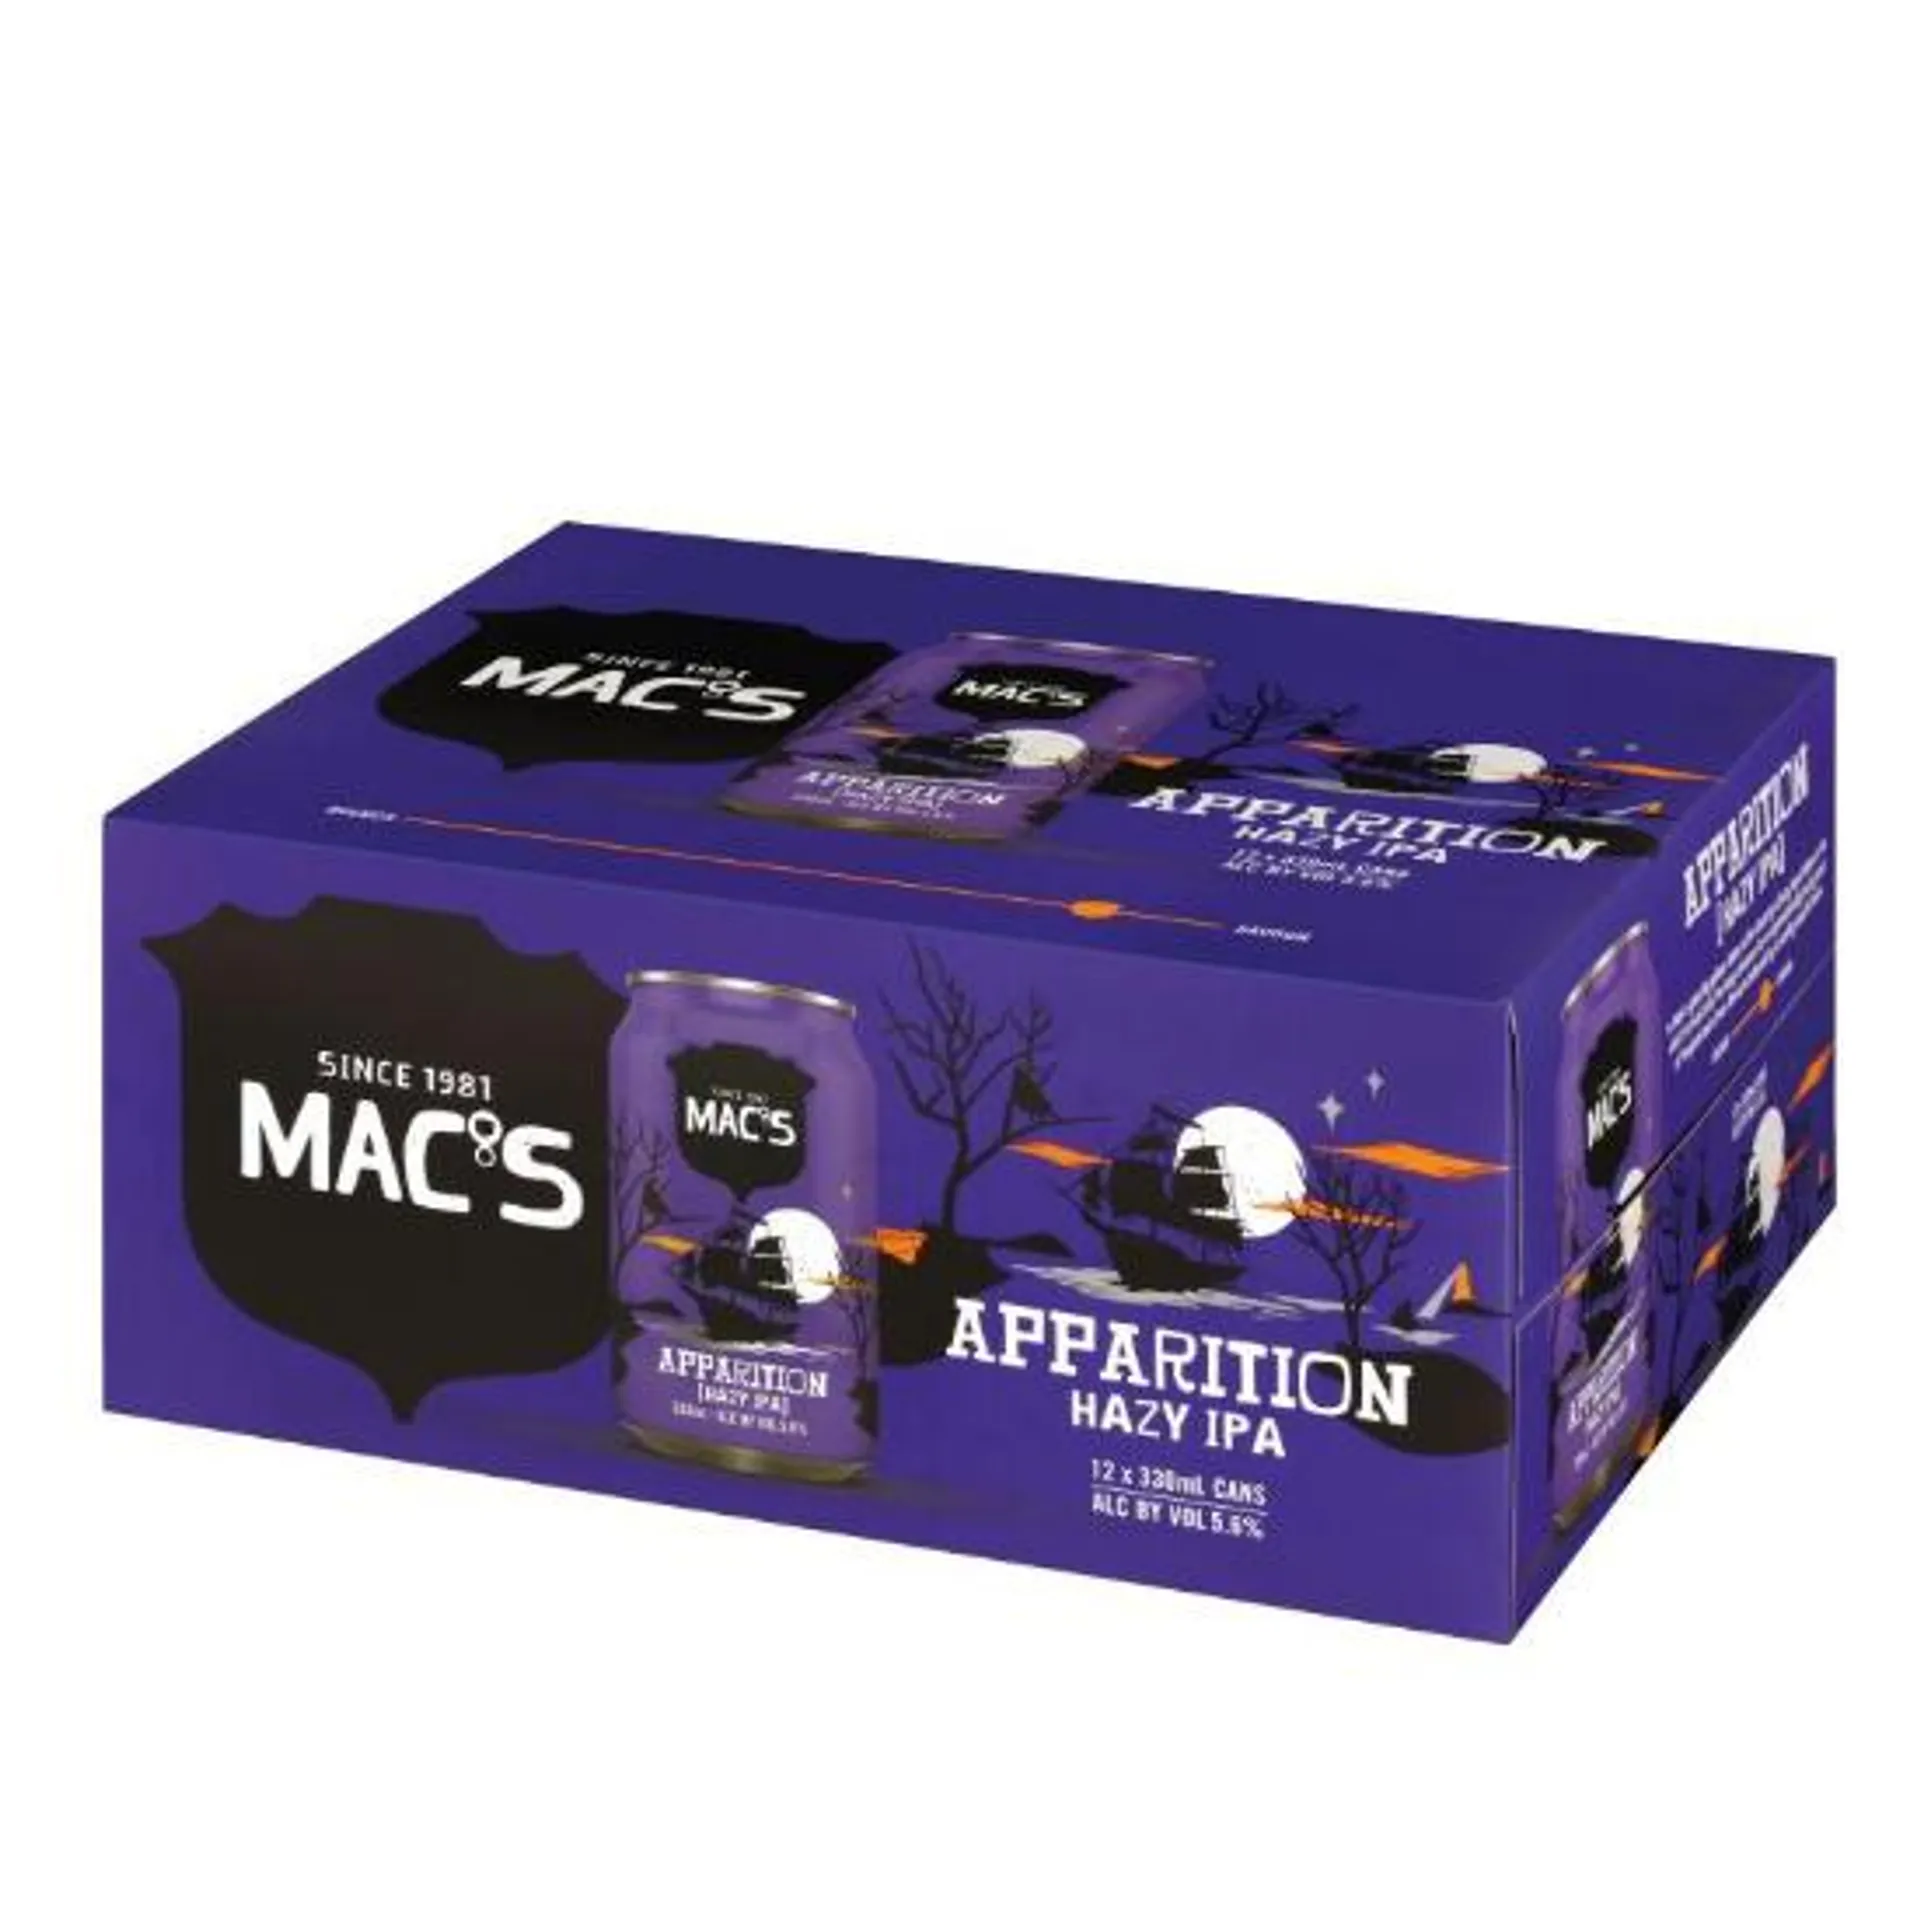 Mac's Apparition Hazy IPA Cans 12x330ml